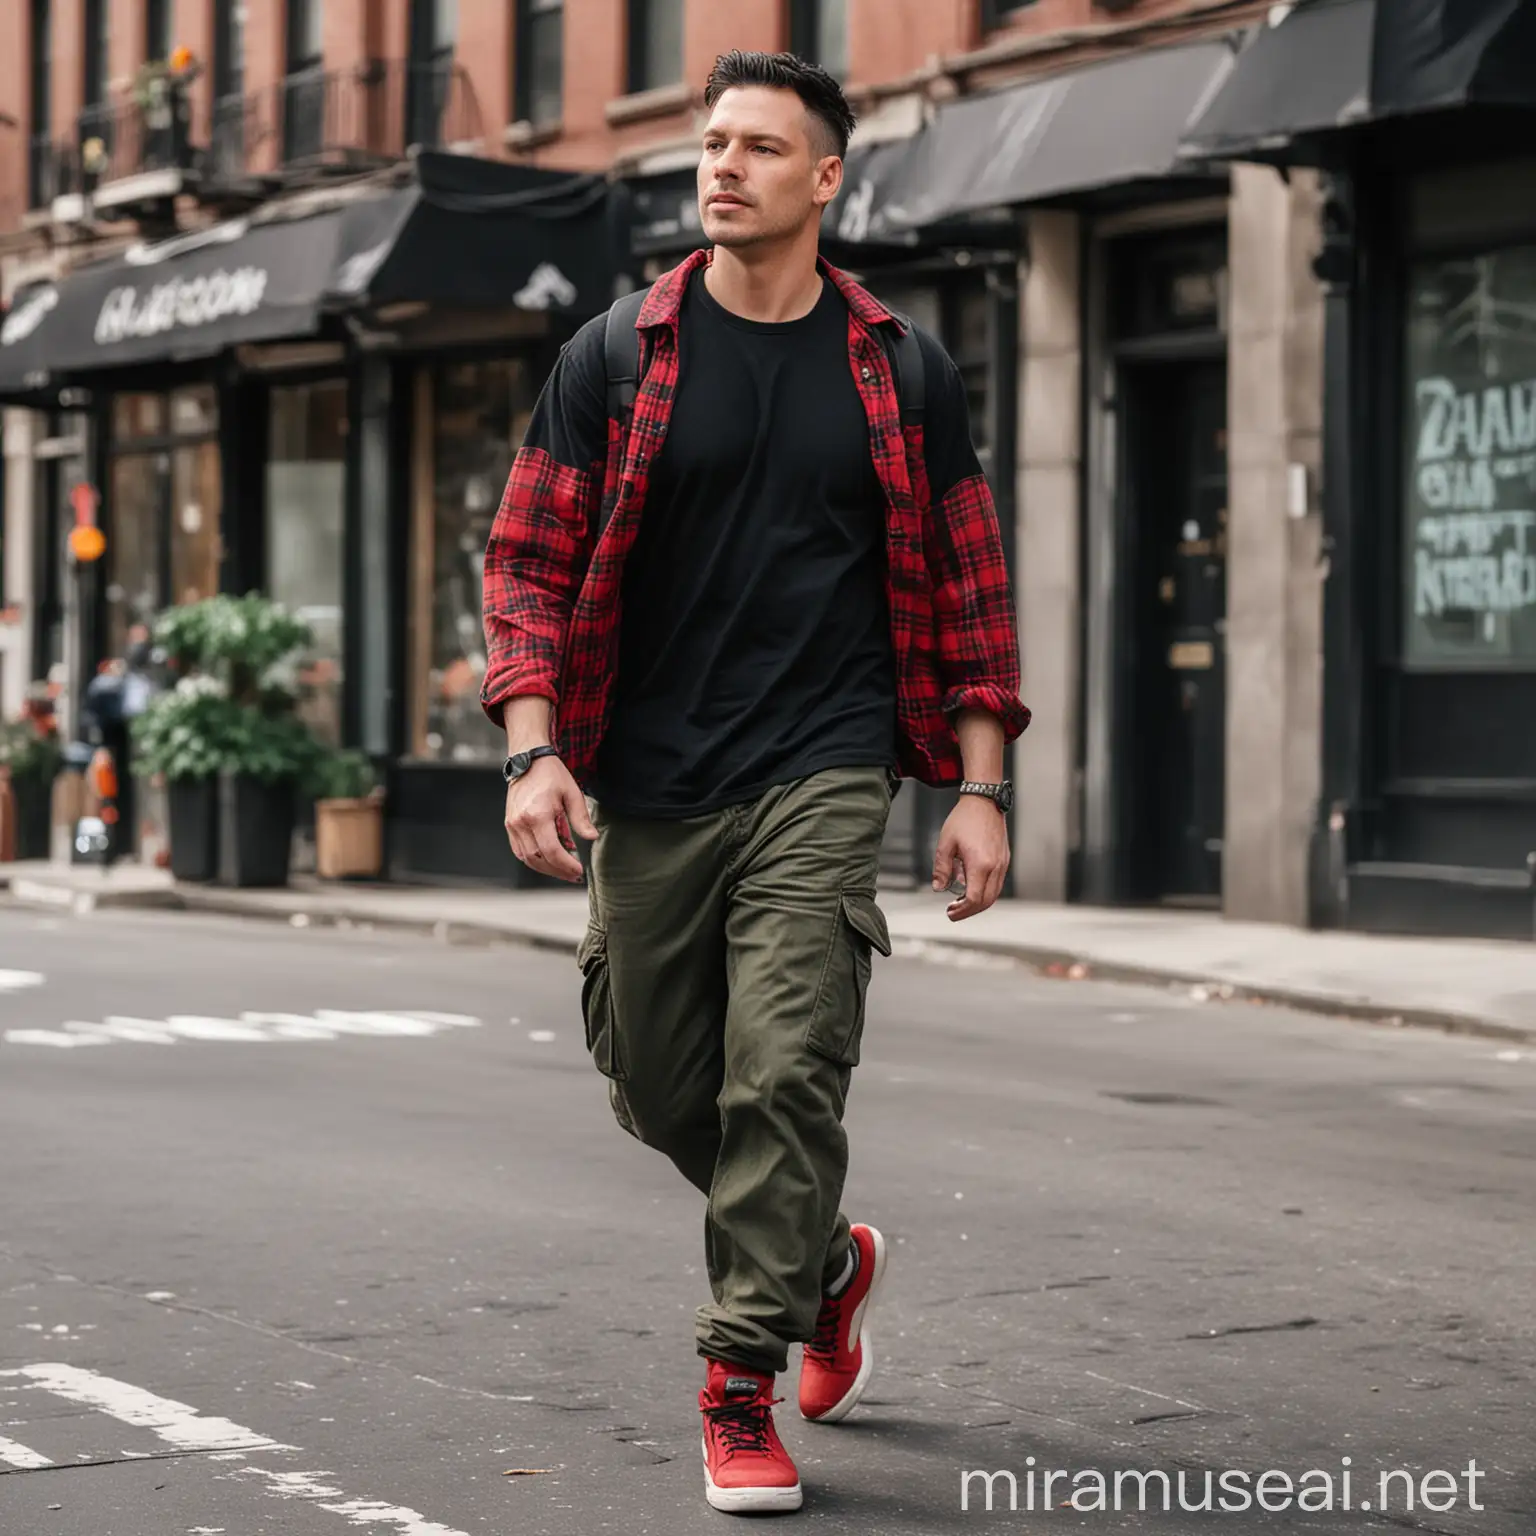 Stylish Man Walking in New York City